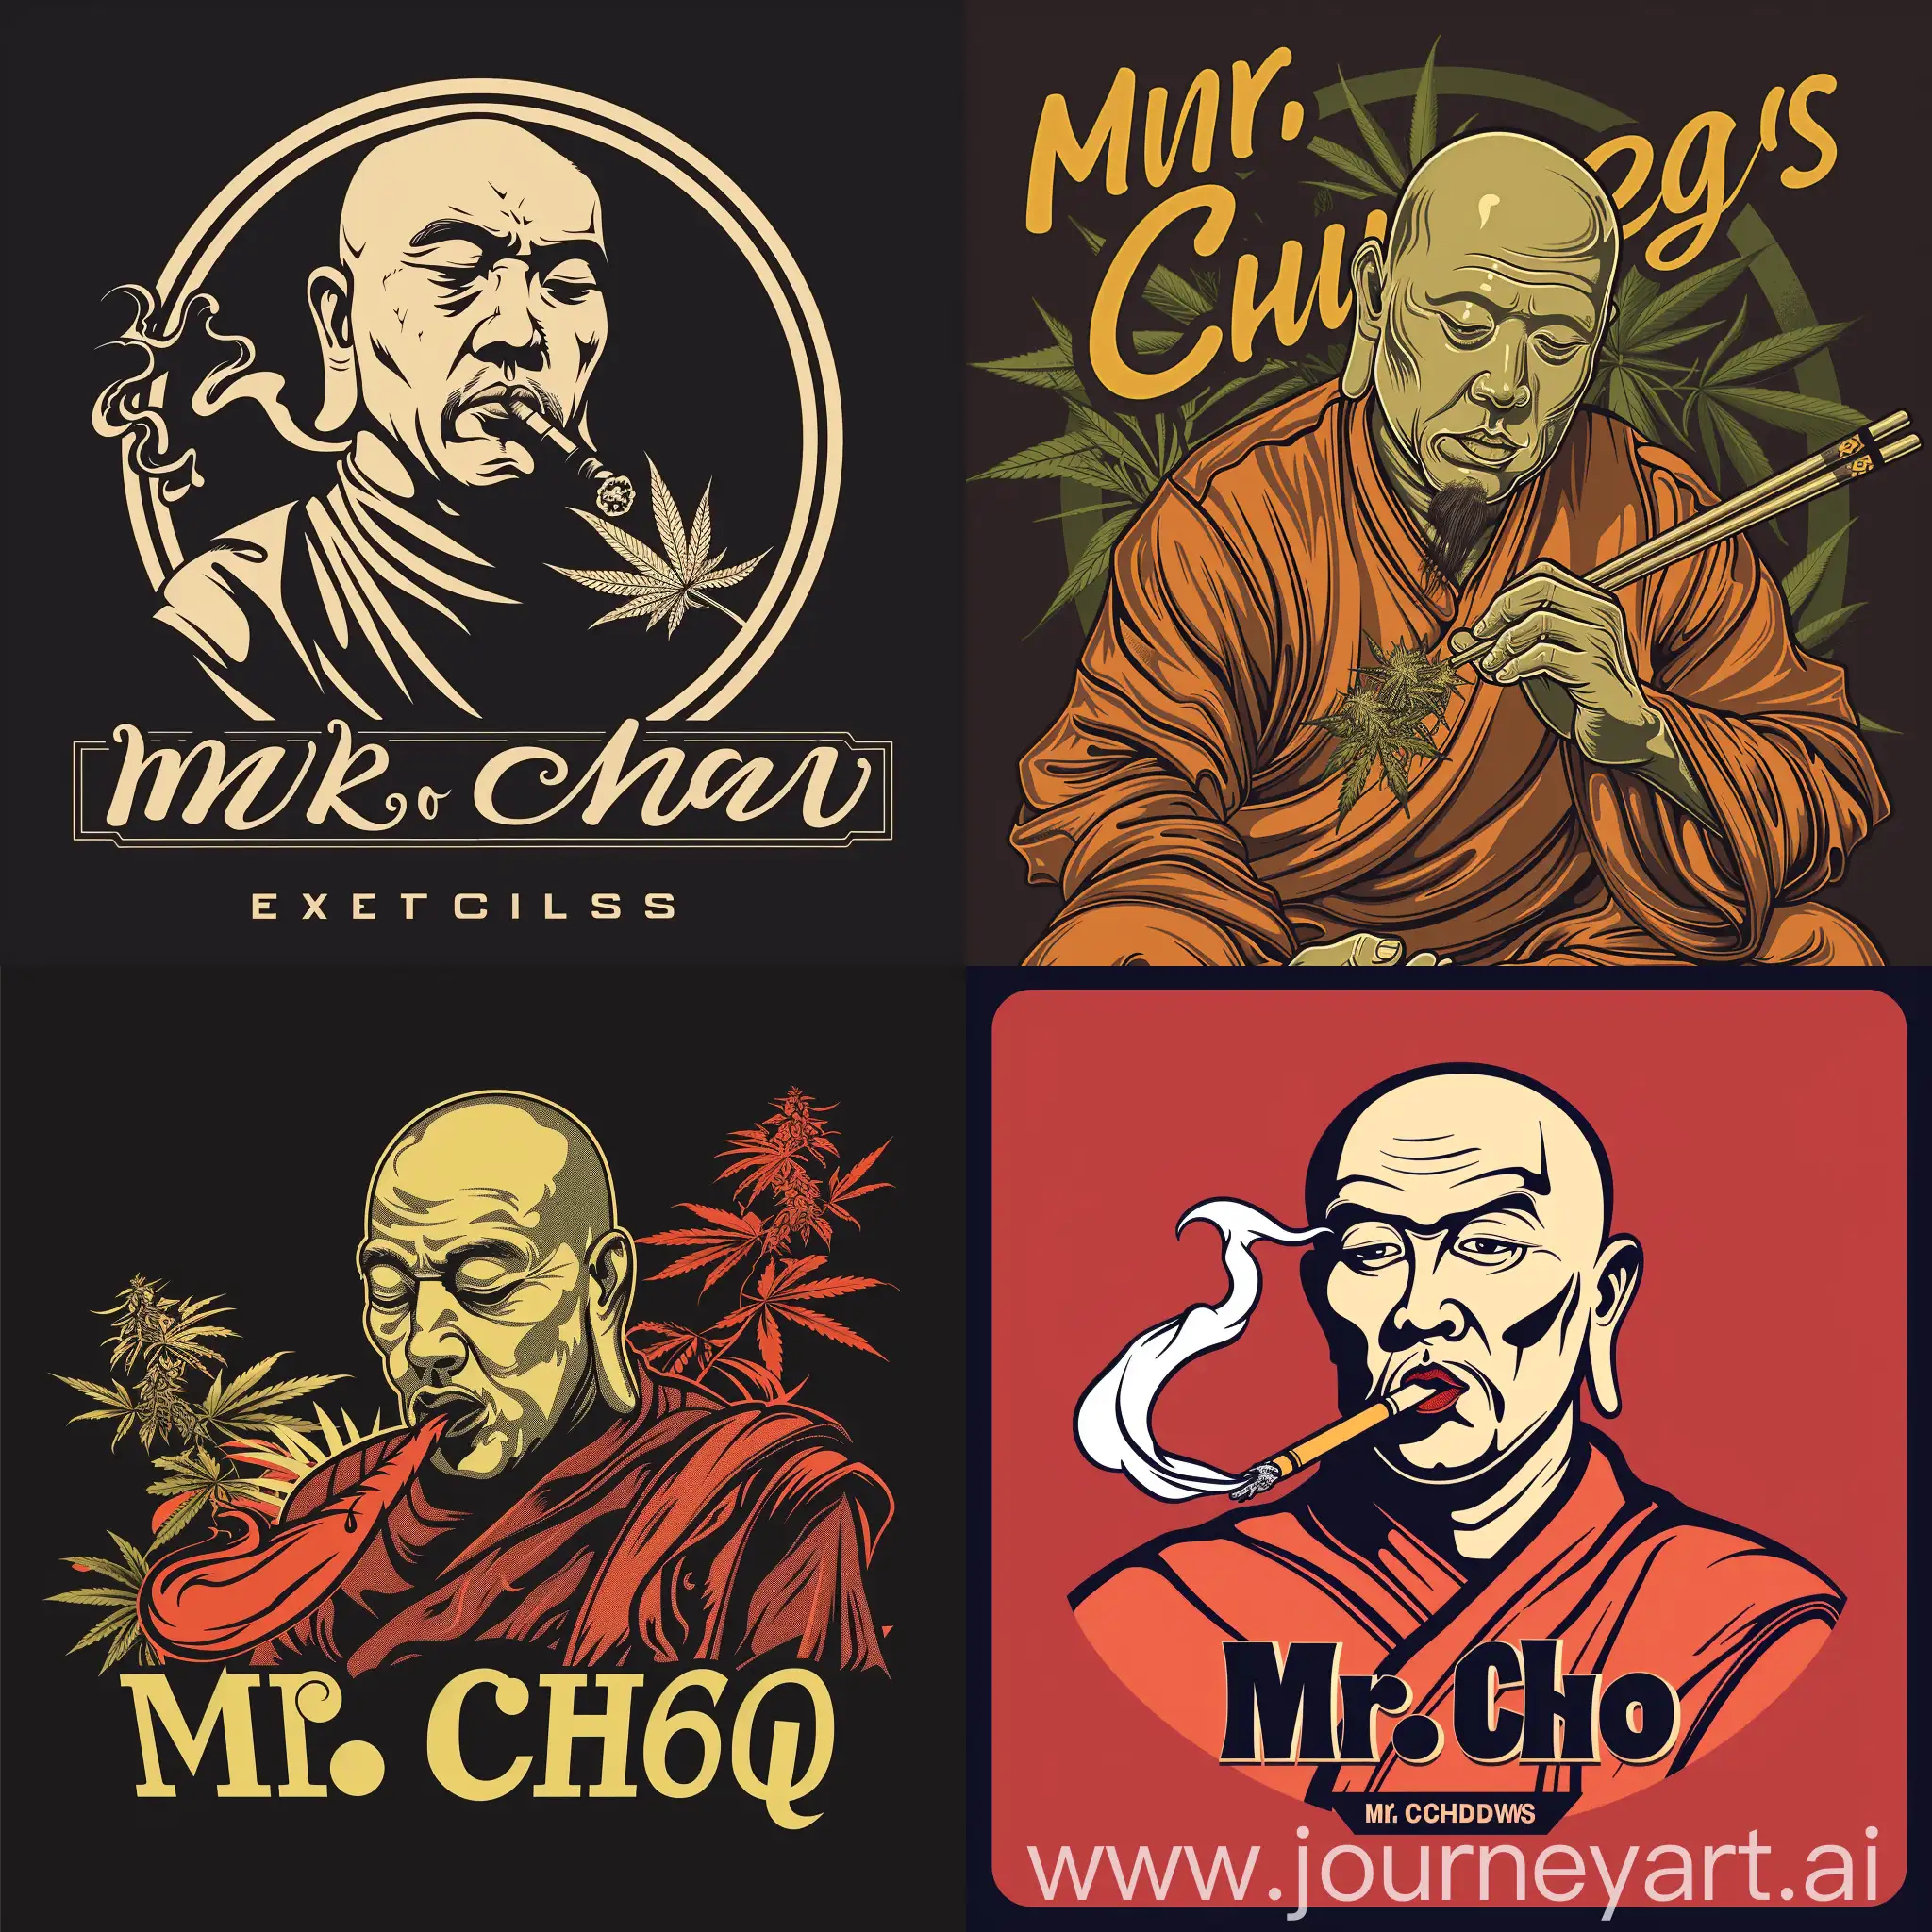 Logo design of a buddah monk smoking marijuana with asian aesthetic make it very classy and elegant saying Mr.Chow Exotics 